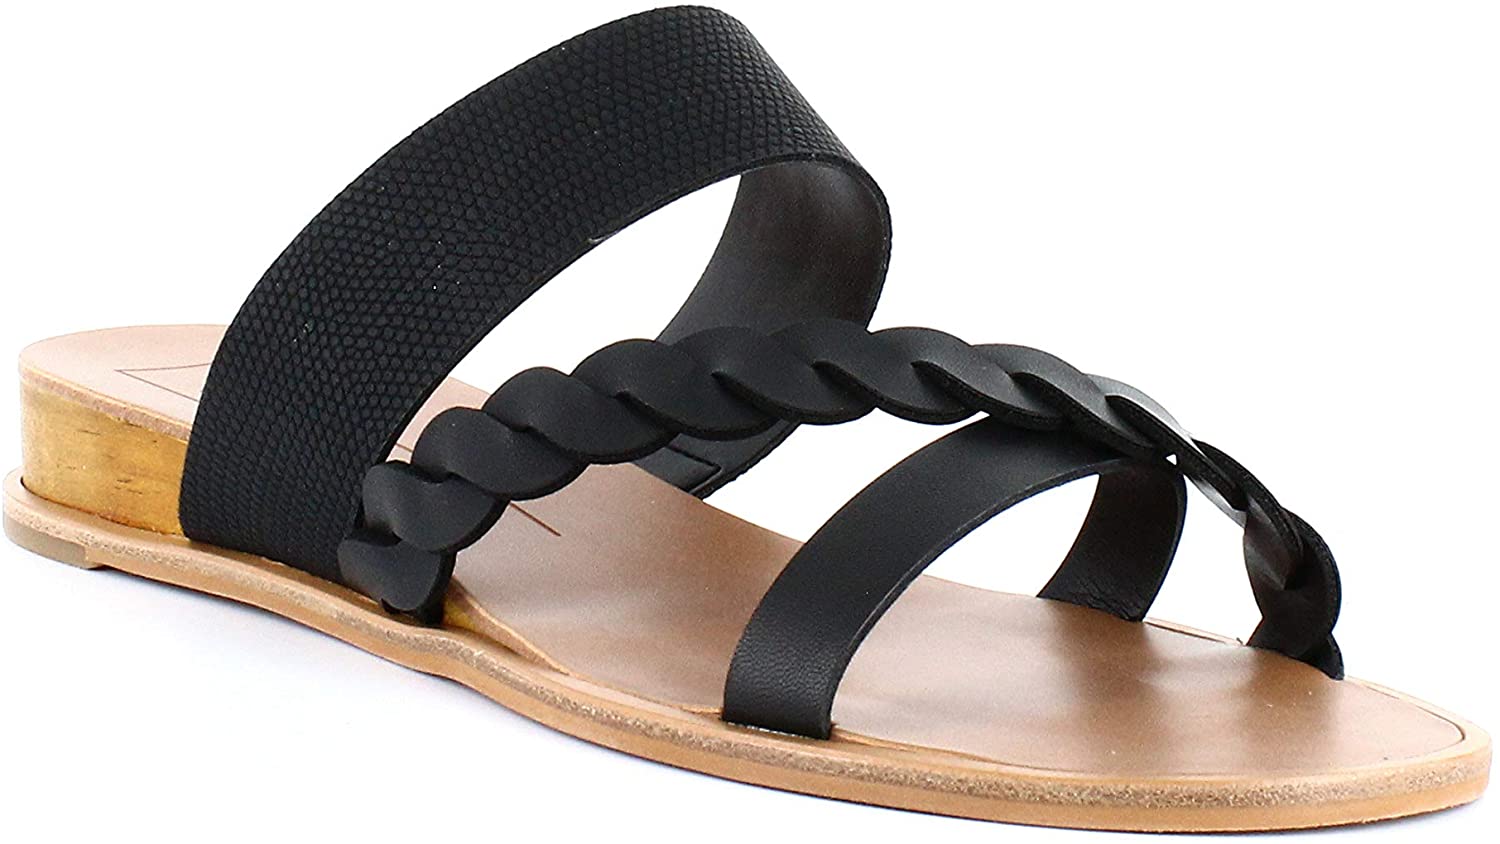 Dolce Vita Peep Toe Wedge Sandals - Kimbra Shoes - Wedges 